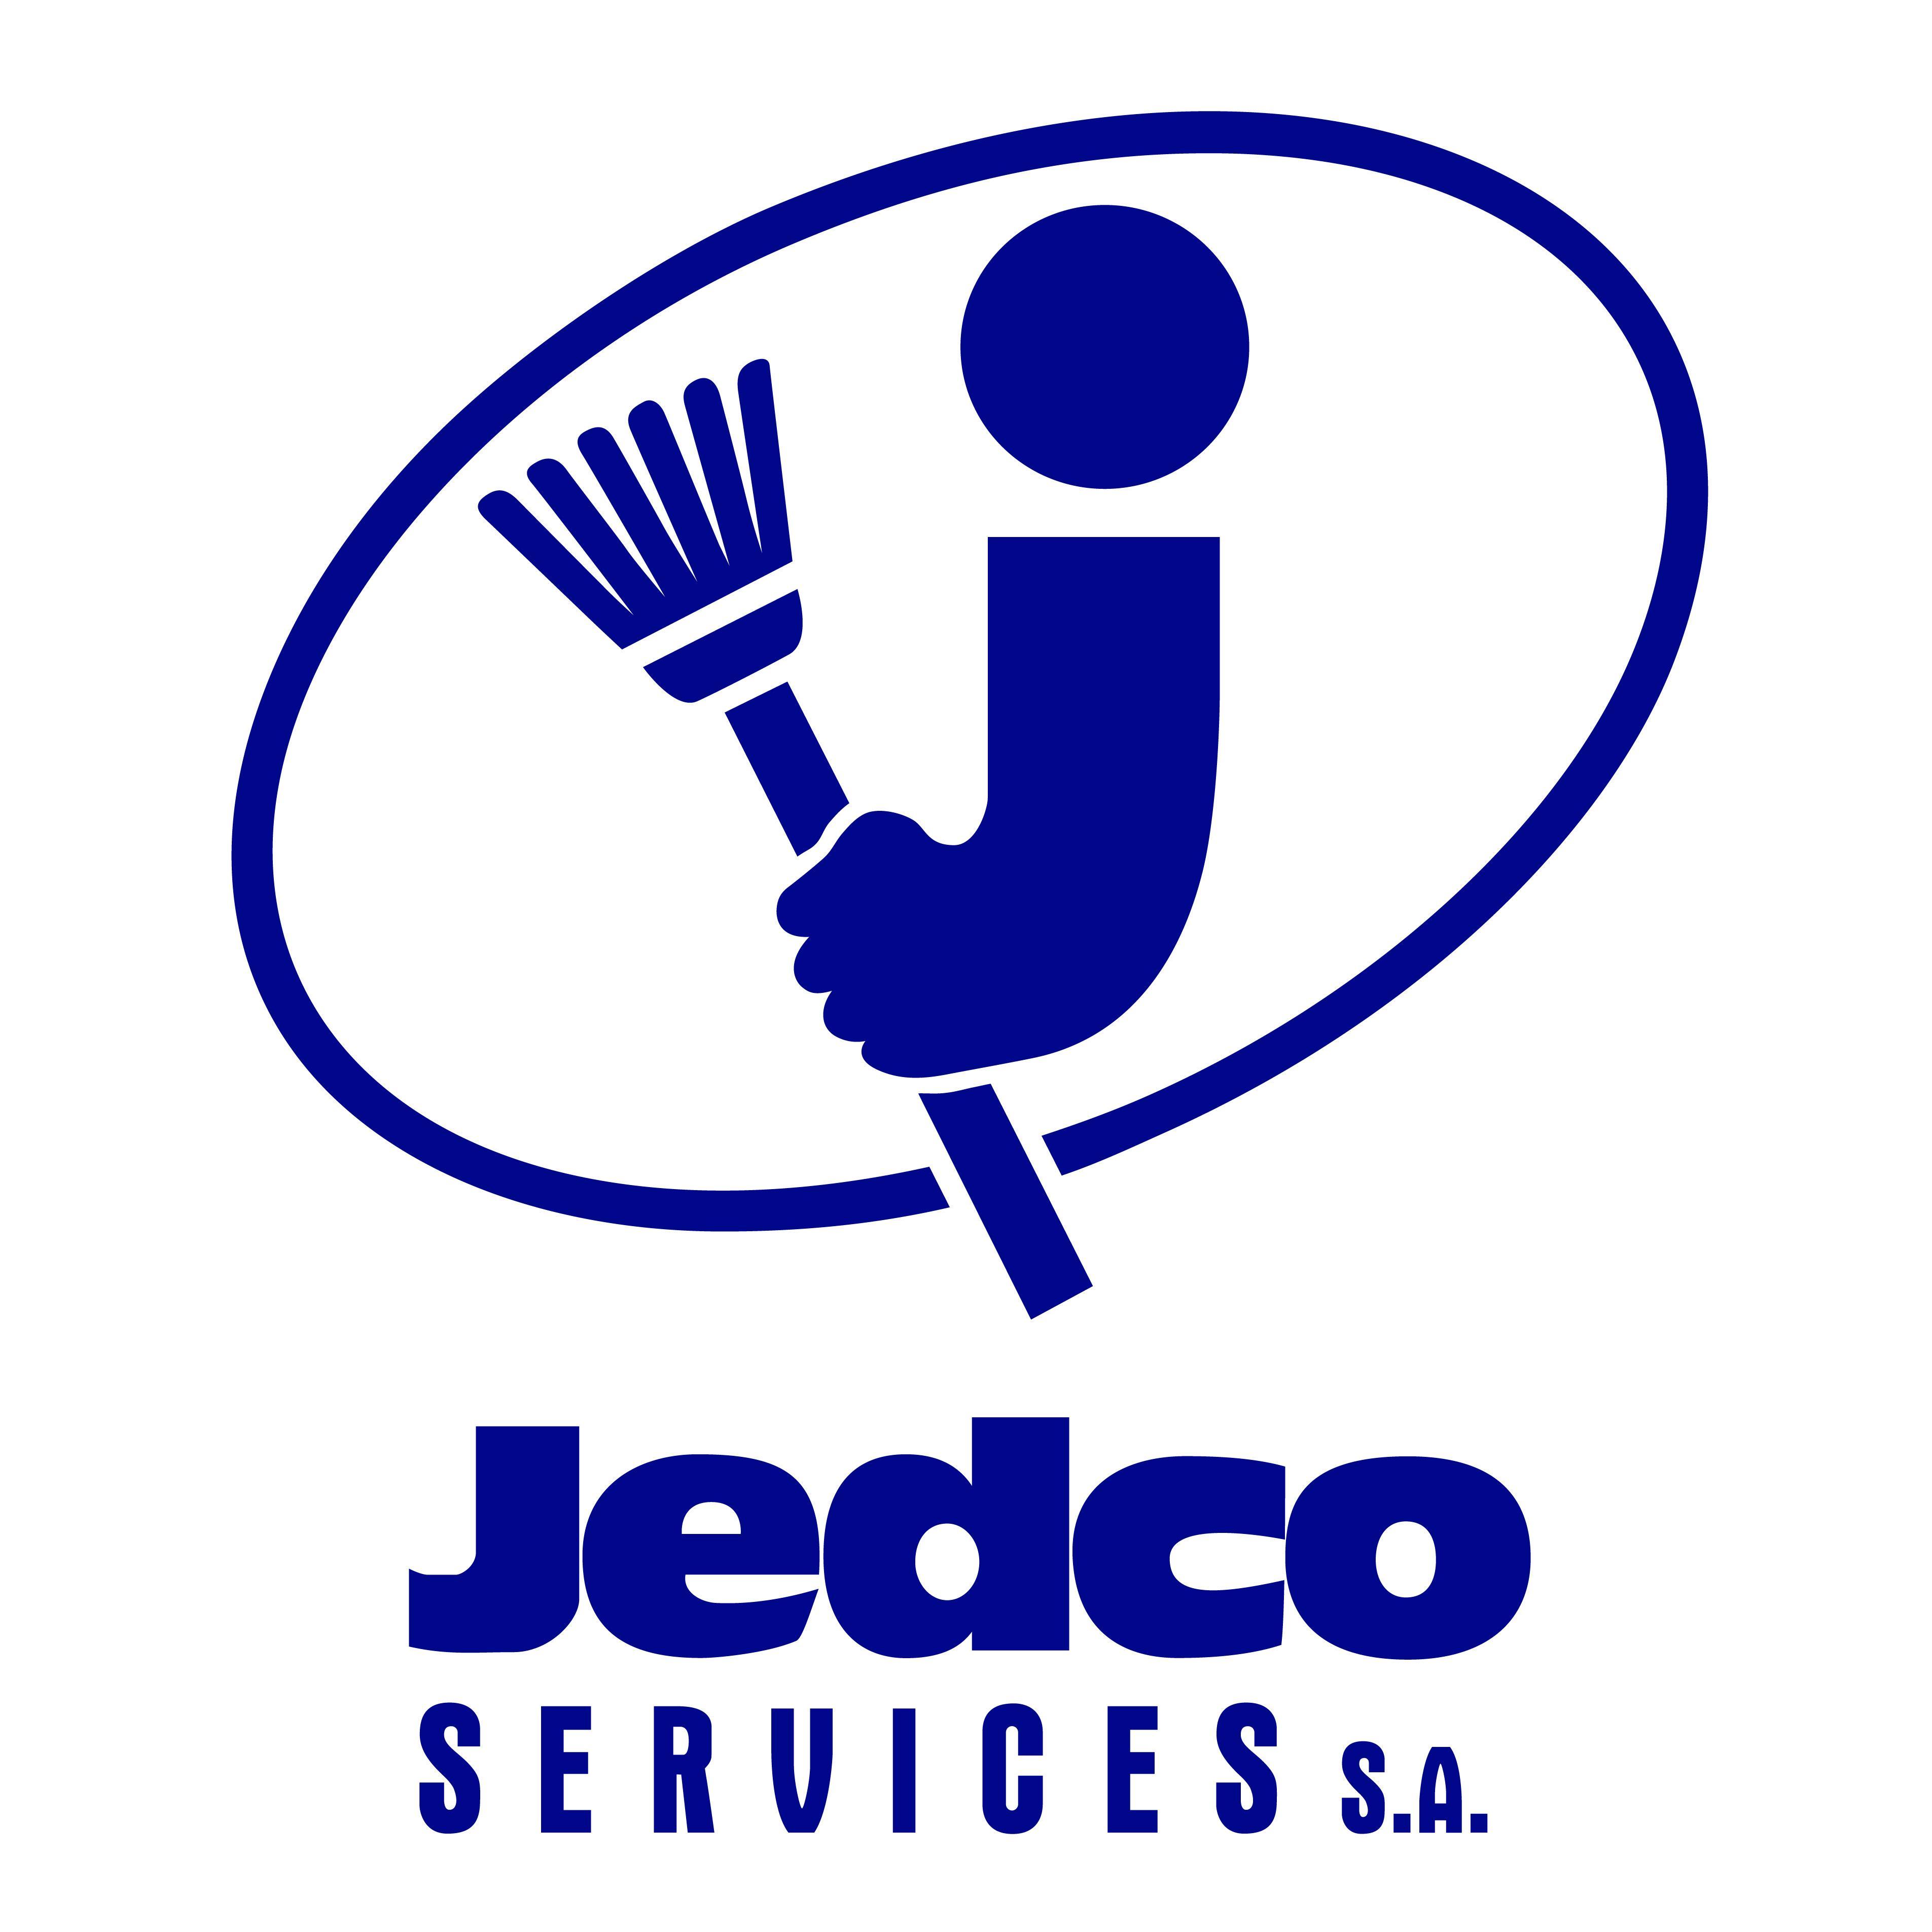 La Jedco est la première compagnie de sanitation en Haïti.... http://t.co/5HuvByKeOv